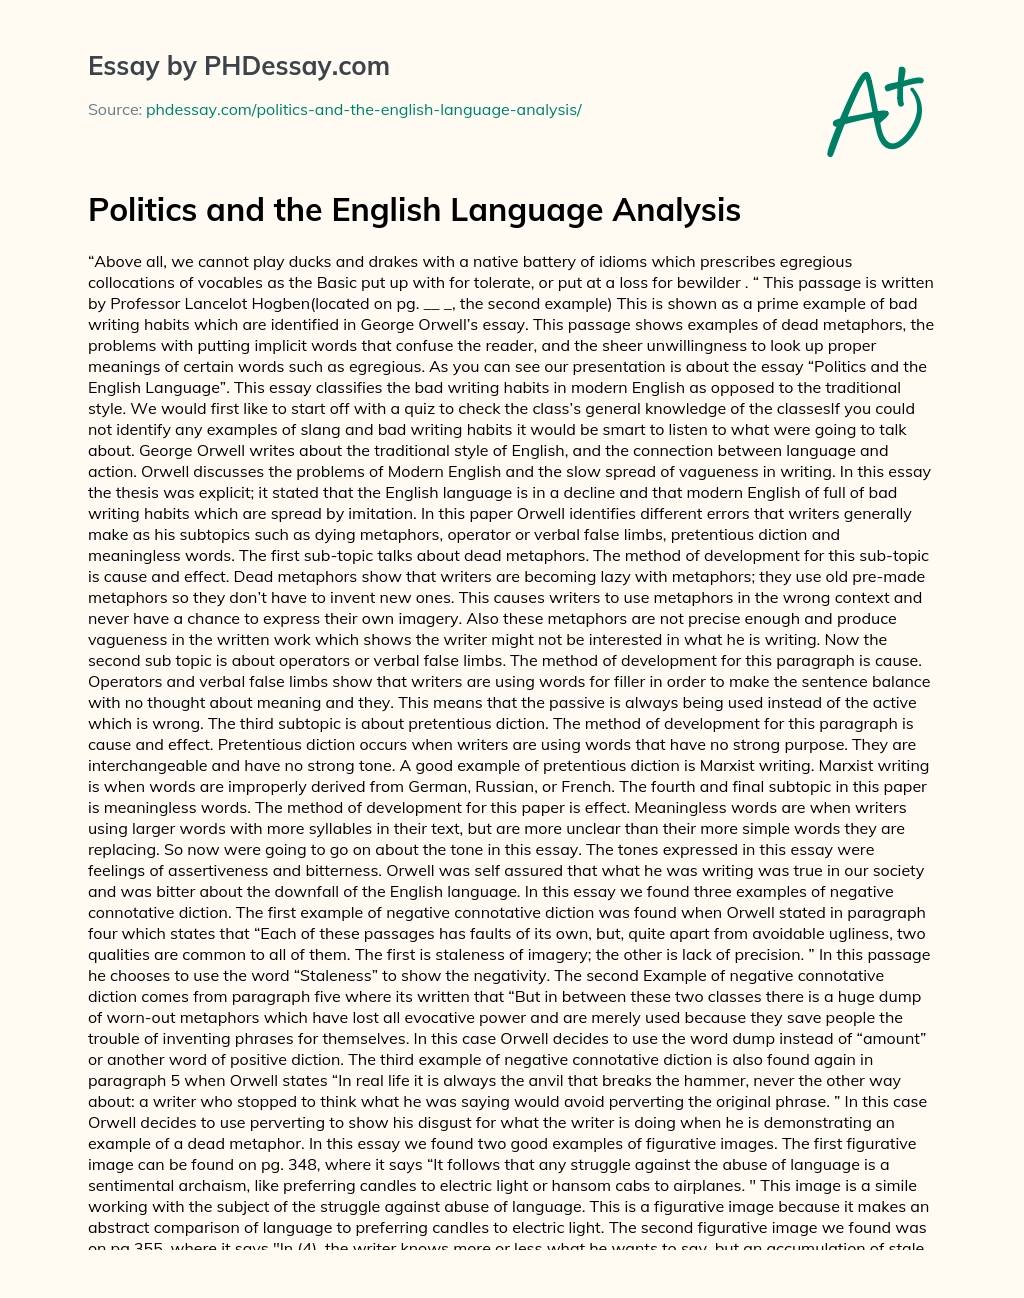 Politics and the English Language Analysis essay